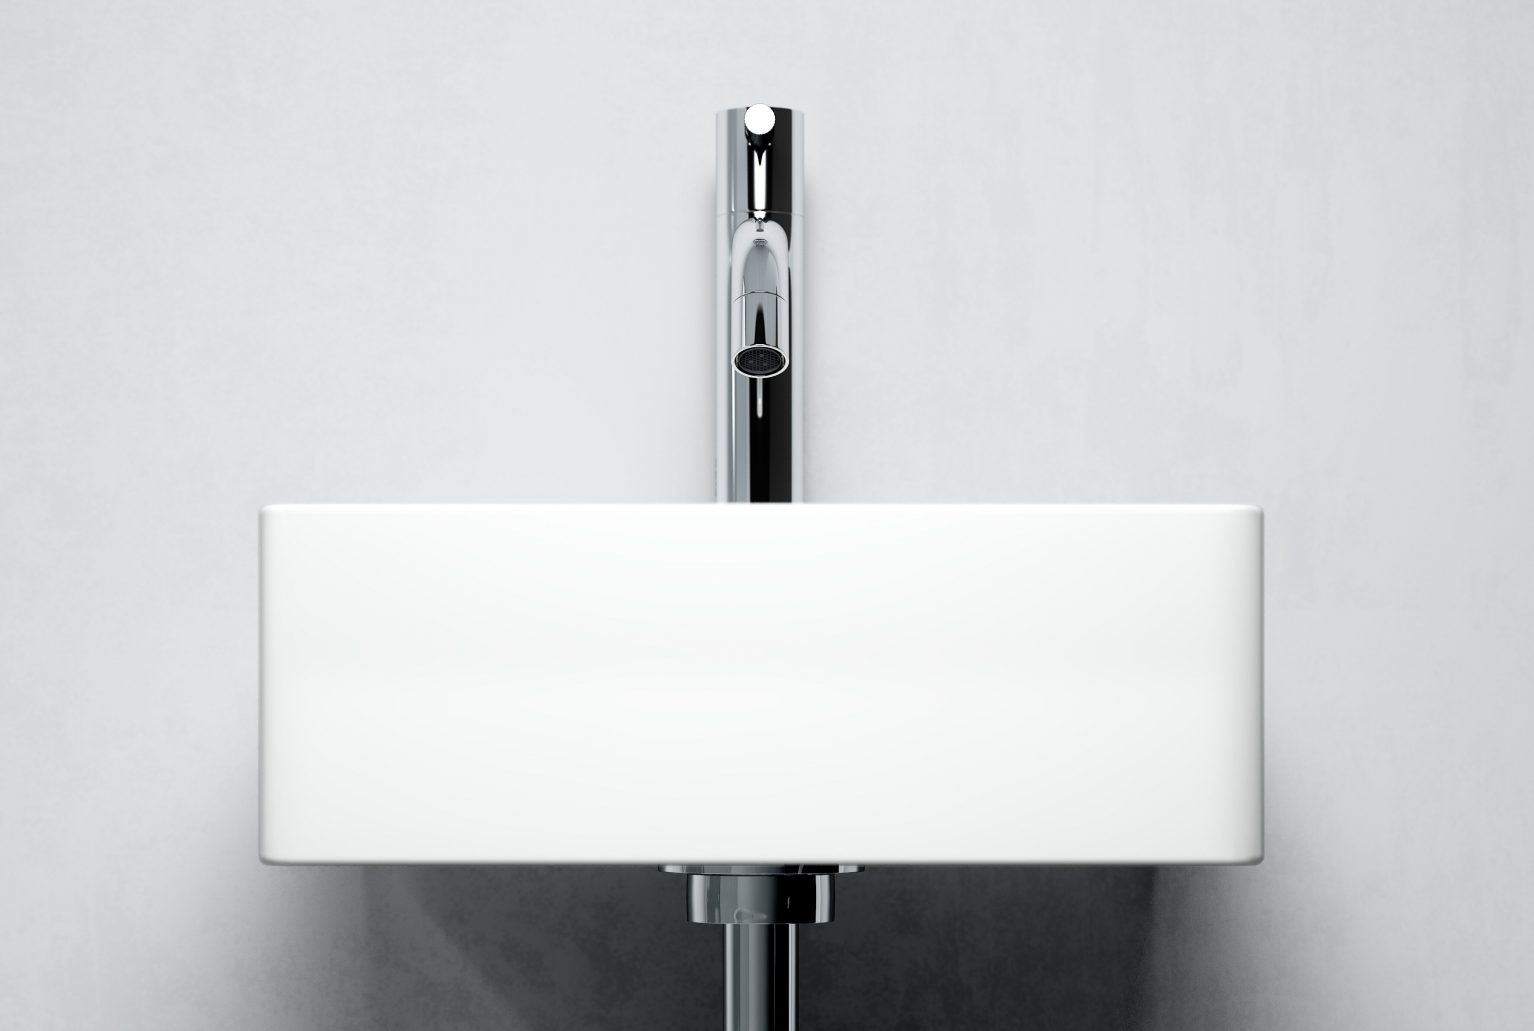 wastafel-kranen-chroom-toilet-badkamer-luxe-sanitair-Freddo-2-clou-CL060300129-fontein-kraan